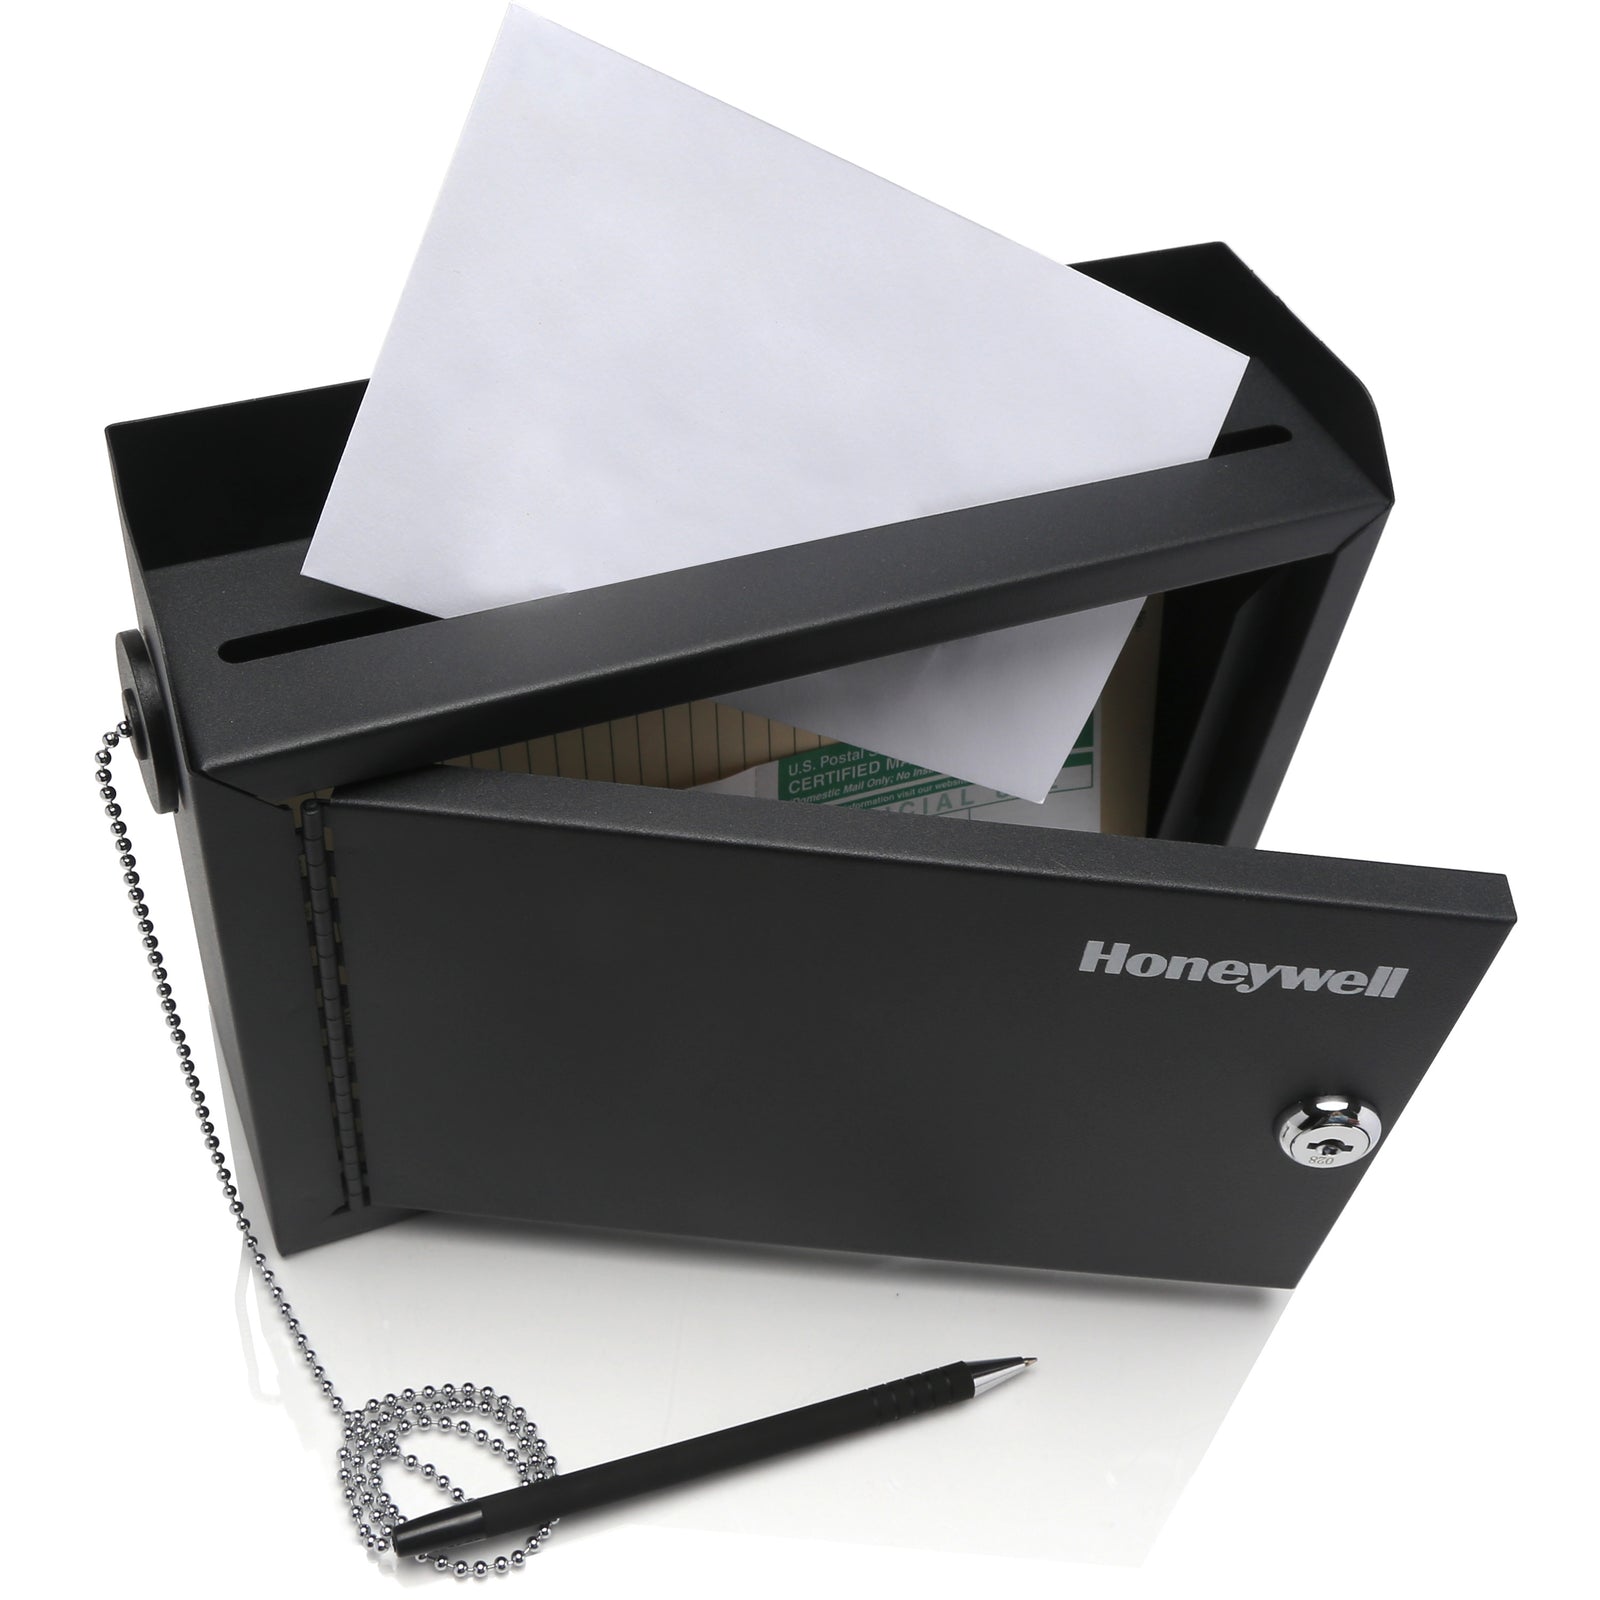 Honeywell 6204 Multipurpose Drop Box with Envelope